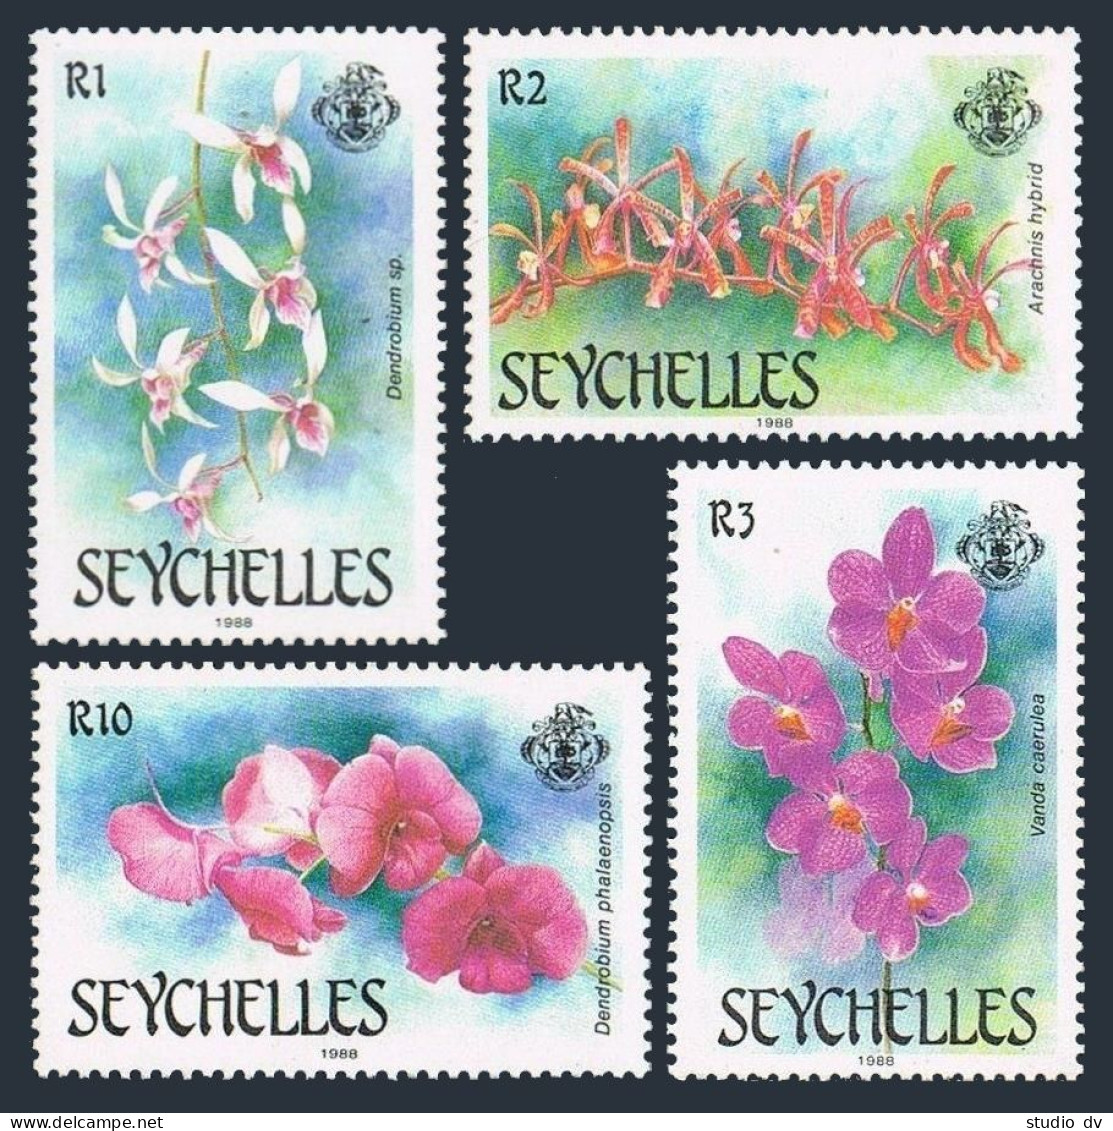 Seychelles 661-664,MNH.Michel 684-687. Orchids 1988.Dendrobium,Arachnis,Vanda, - Seychelles (1976-...)